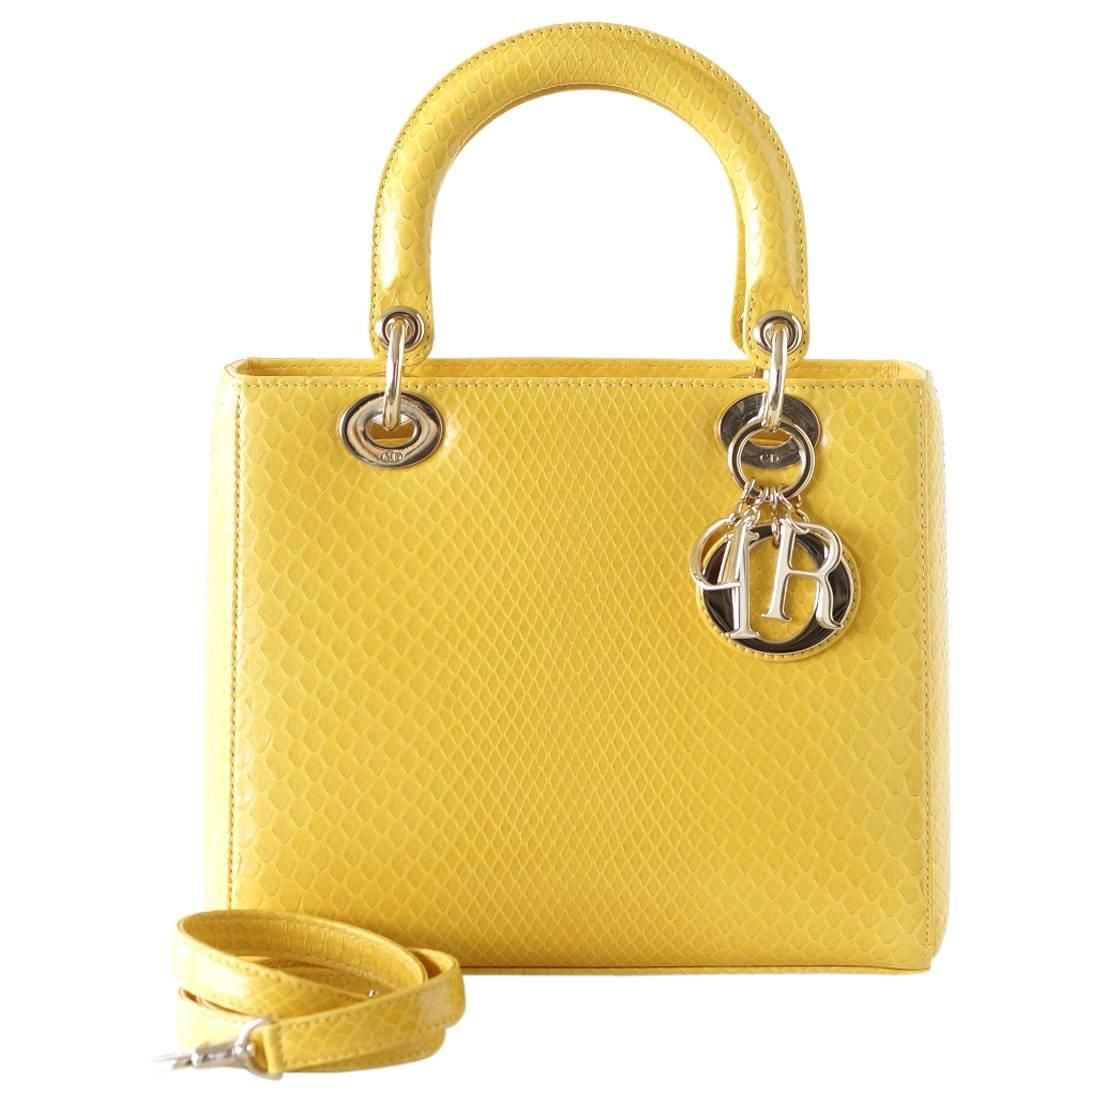 CHRISTIAN DIOR Bag Lady Dior Medium Beautiful Clear Yellow Snakeskin